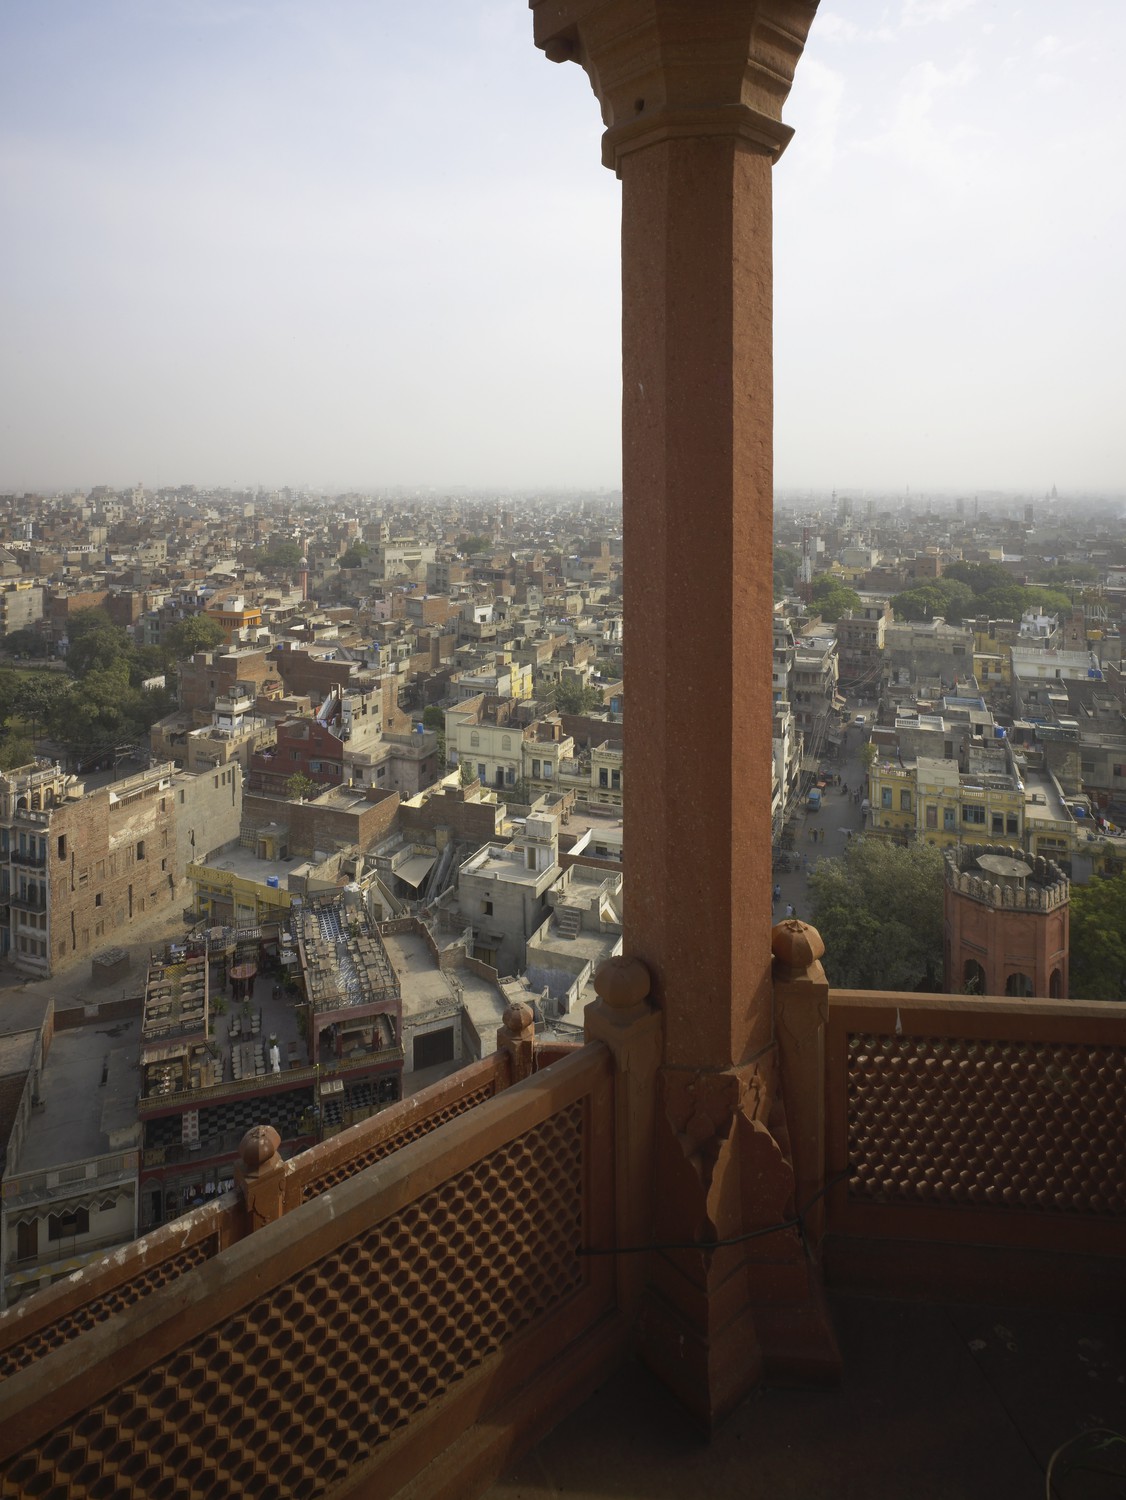 Lahore Walled City Urban Regeneration Project - Aeriel view over Shahi Guzargah neighbourhood